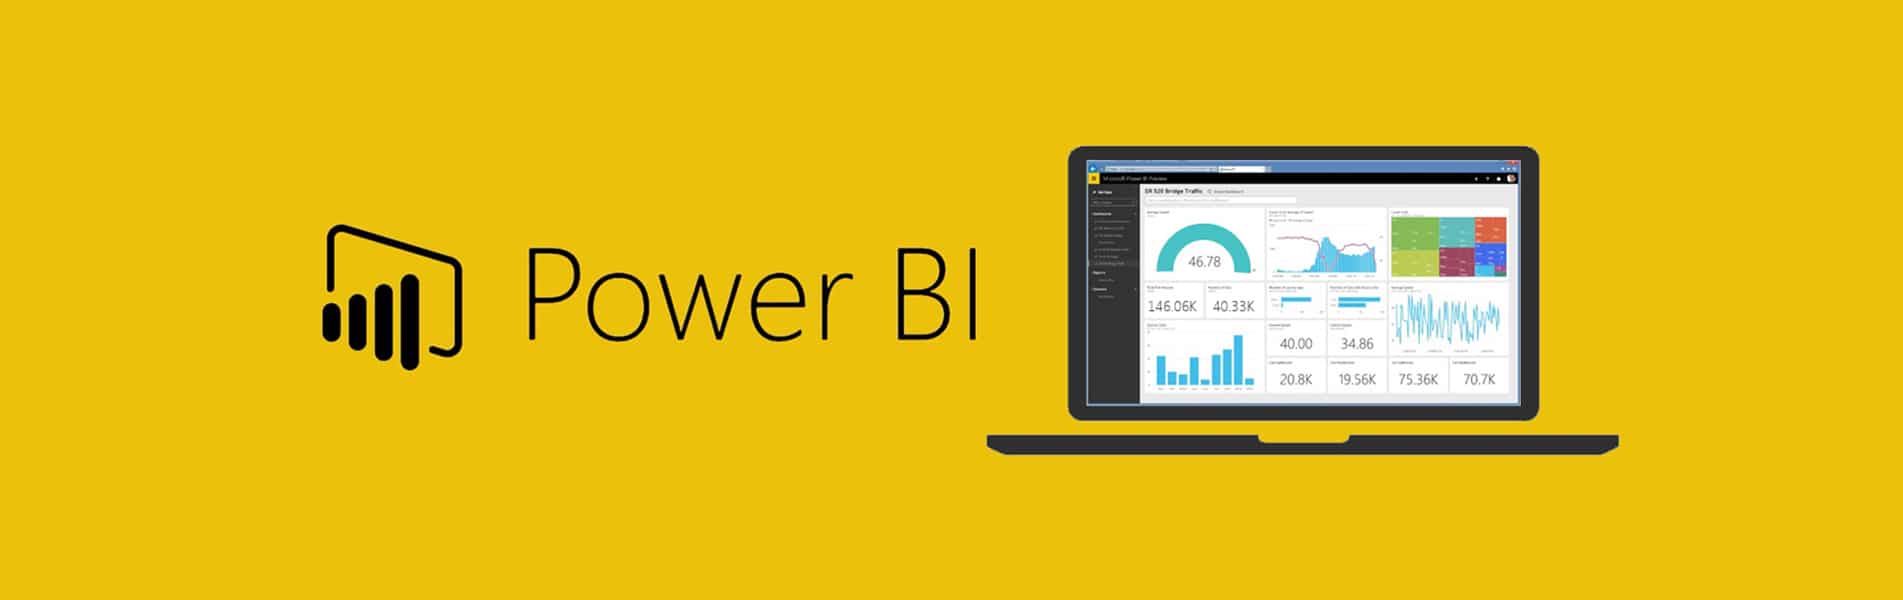 Power BI Makes it Easier to Integrate Data for Analysis | Strategix